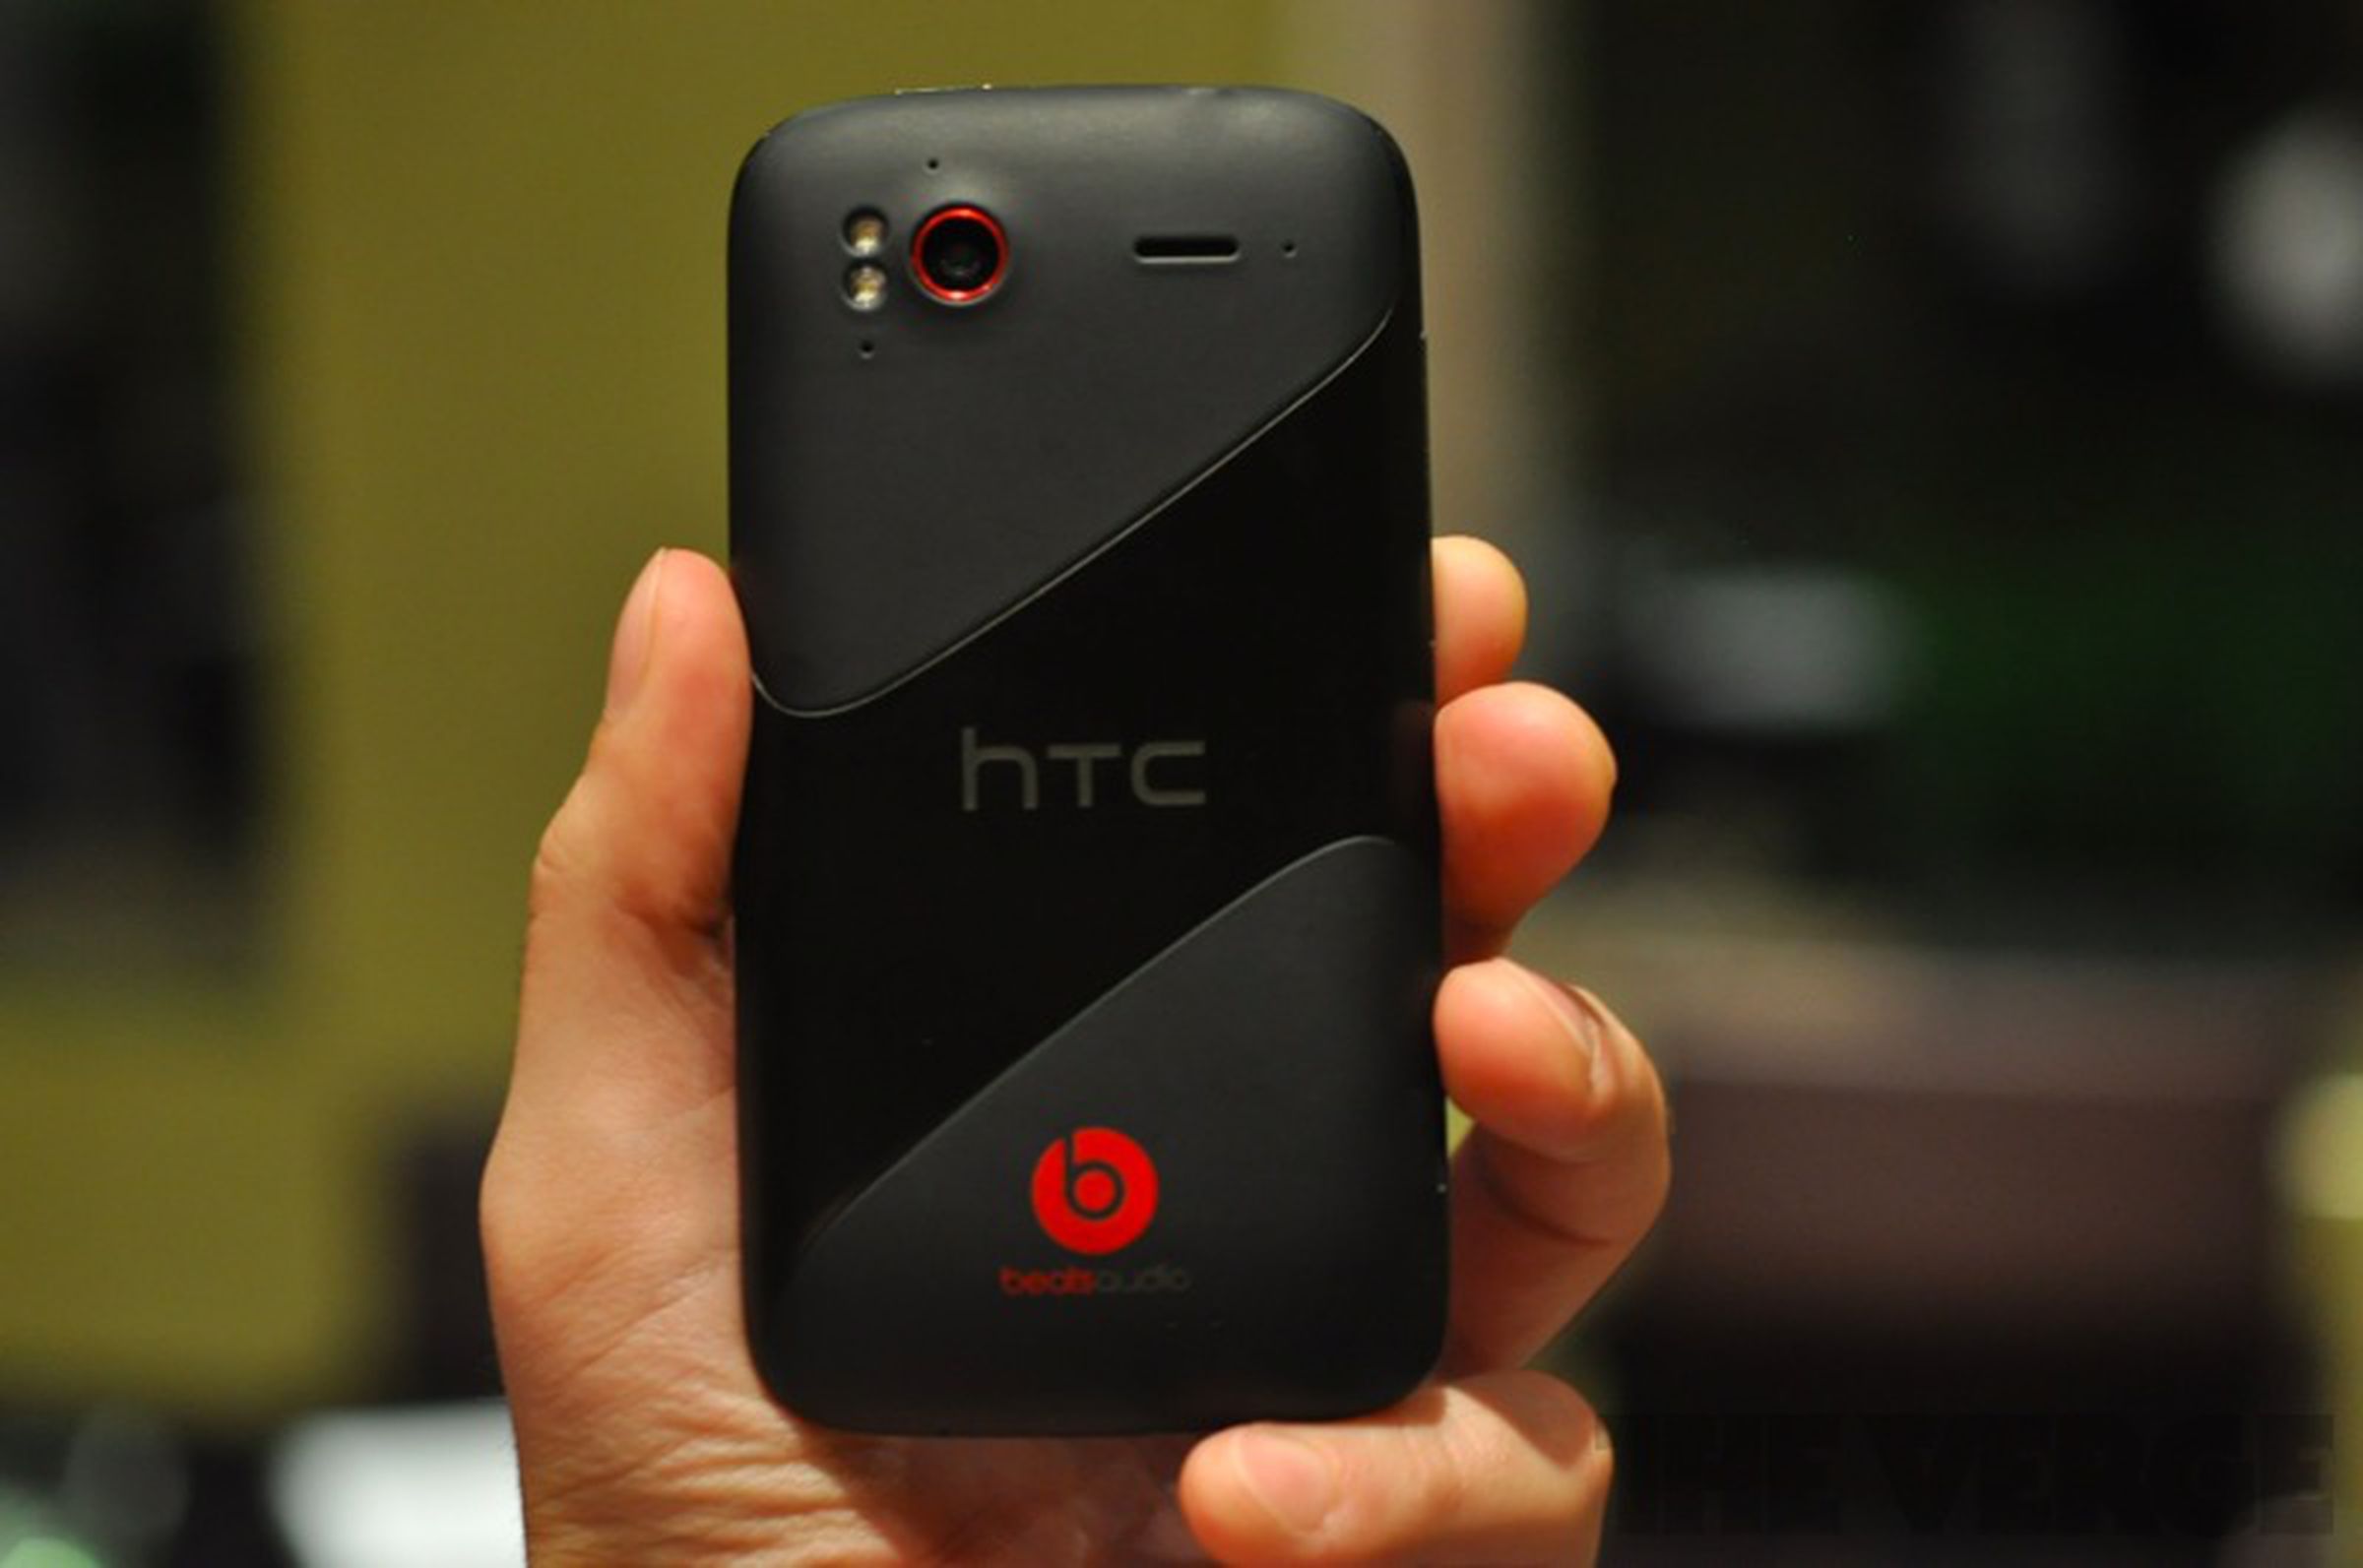 HTC Sensation XE hands on photos